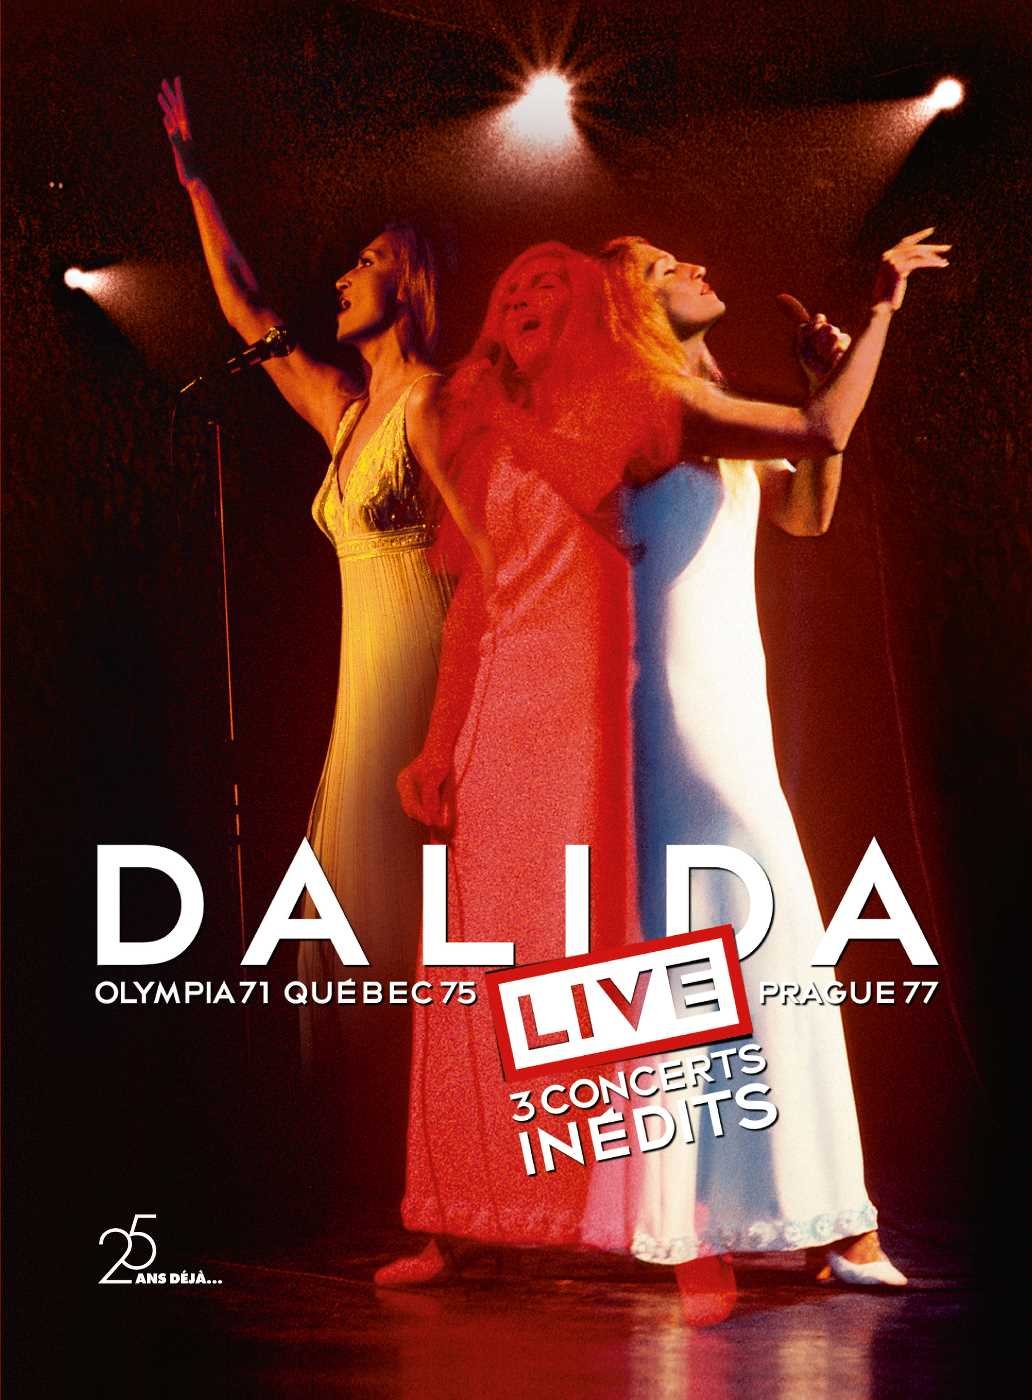 Dalida Live